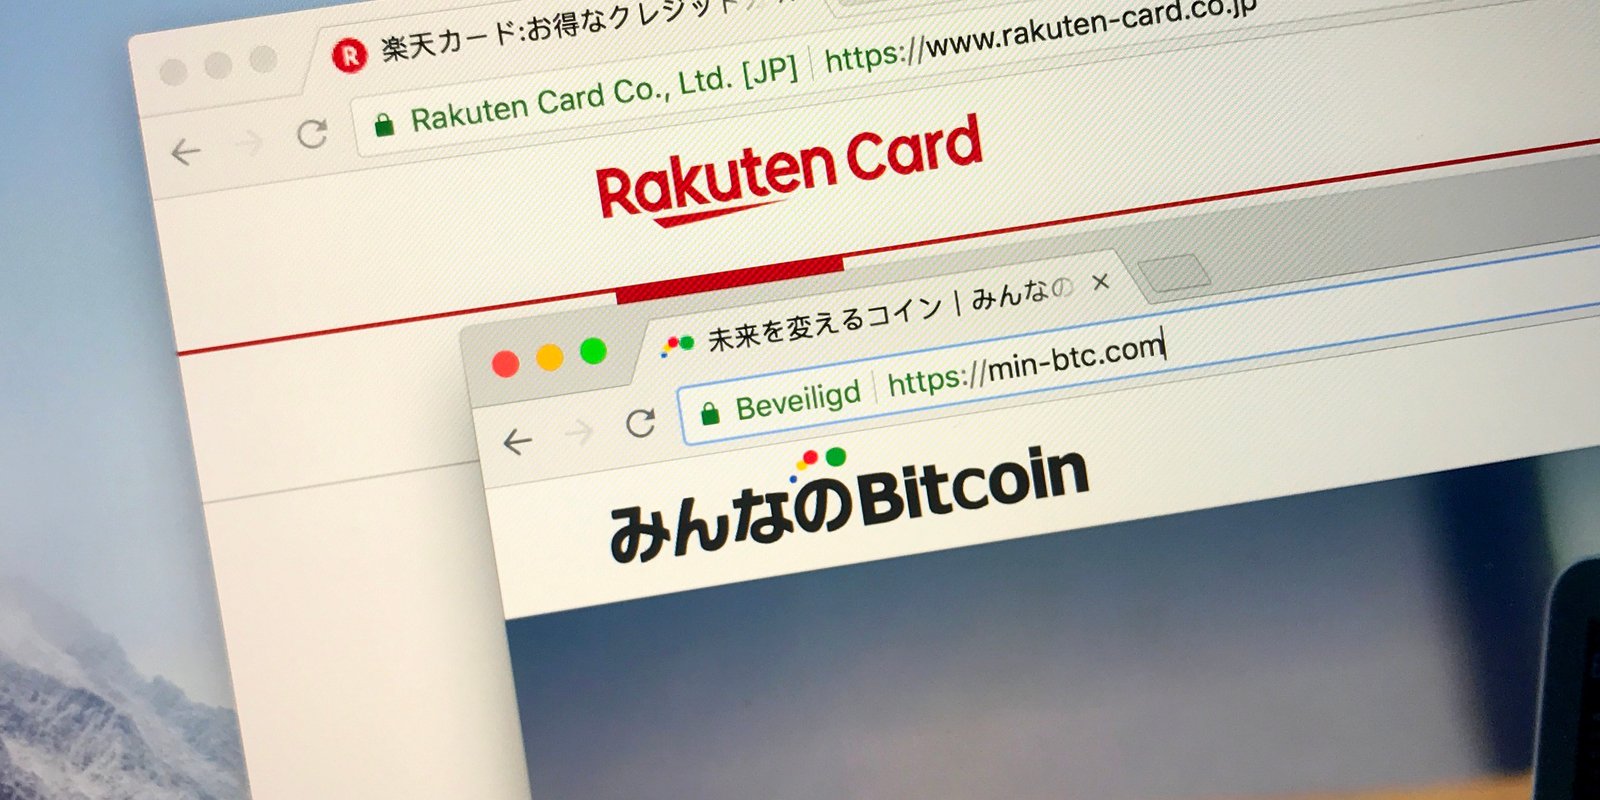 Monex ofrece recompensas criptográficas a los accionistas que promueven la adopción japonesa "width =" 1600 "height =" 800 "srcset =" https://news.bitcoin.com/wp-content/uploads/2019/09/shutterstock_1168775560.jpg 1600w, https: //news.bitcoin.com/wp-content/uploads/2019/09/shutterstock_1168775560-300x150.jpg 300w, https://news.bitcoin.com/wp-content/uploads/2019/09/shutterstock_1168775560-768x384.jpg 768w, https://news.bitcoin.com/wp-content/uploads/2019/09/shutterstock_1168775560-1024x512.jpg 1024w, https://news.bitcoin.com/wp-content/uploads/2019/09/shutterstock_1168775560 -696x348.jpg 696w, https://news.bitcoin.com/wp-content/uploads/2019/09/shutterstock_1168775560-1392x696.jpg 1392w, https://news.bitcoin.com/wp-content/uploads/2019 /09/shutterstock_1168775560-1068x534.jpg 1068w, https://news.bitcoin.com/wp-content/uploads/2019/09/shutterstock_1168775560-840x420.jpg 840w "tamaños =" (ancho máximo: 1600px) 100vw, 1600px